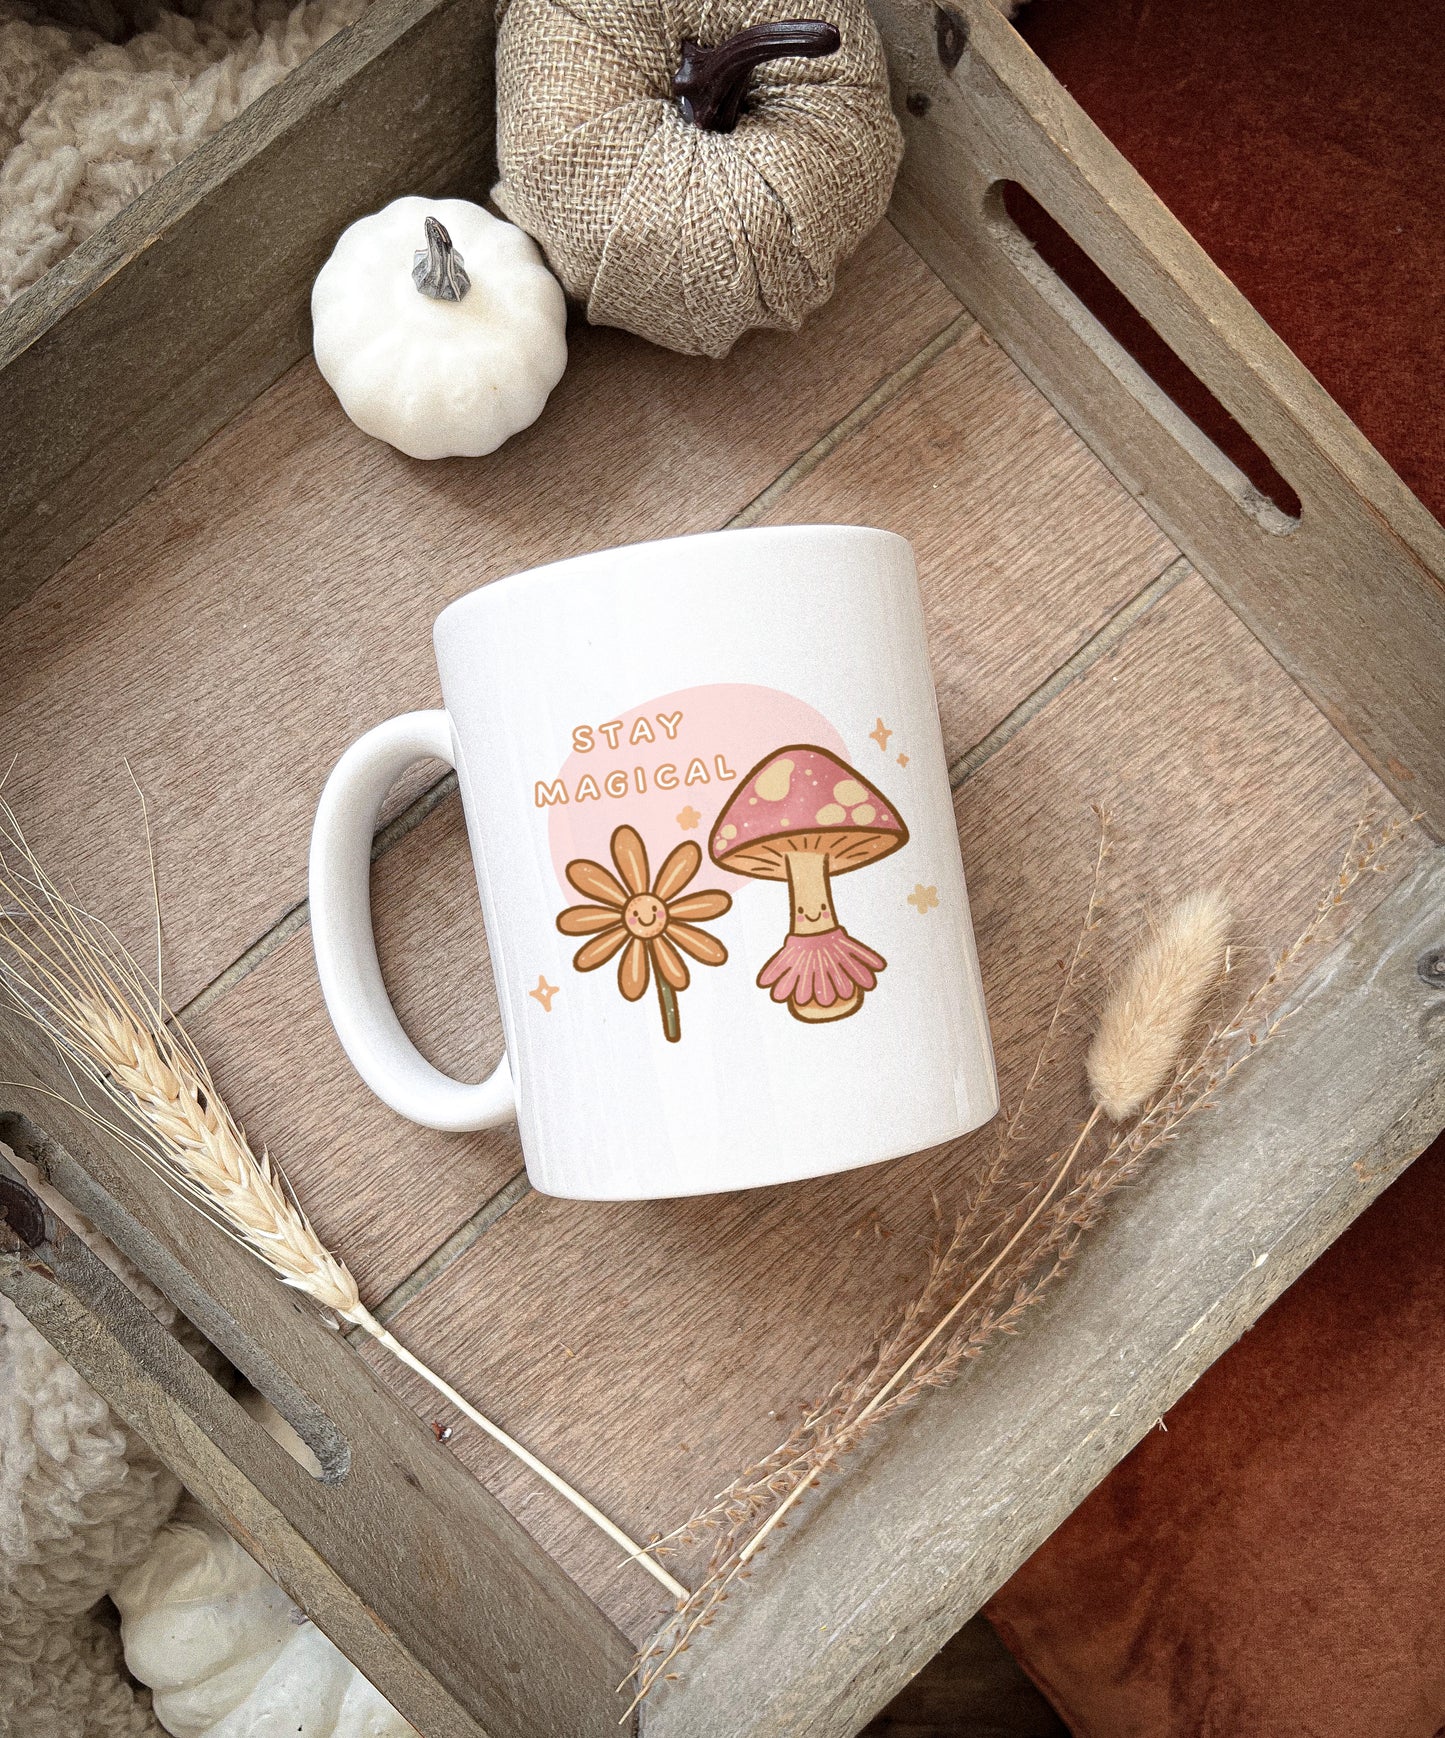 Stay Magical - Mushroom Mug